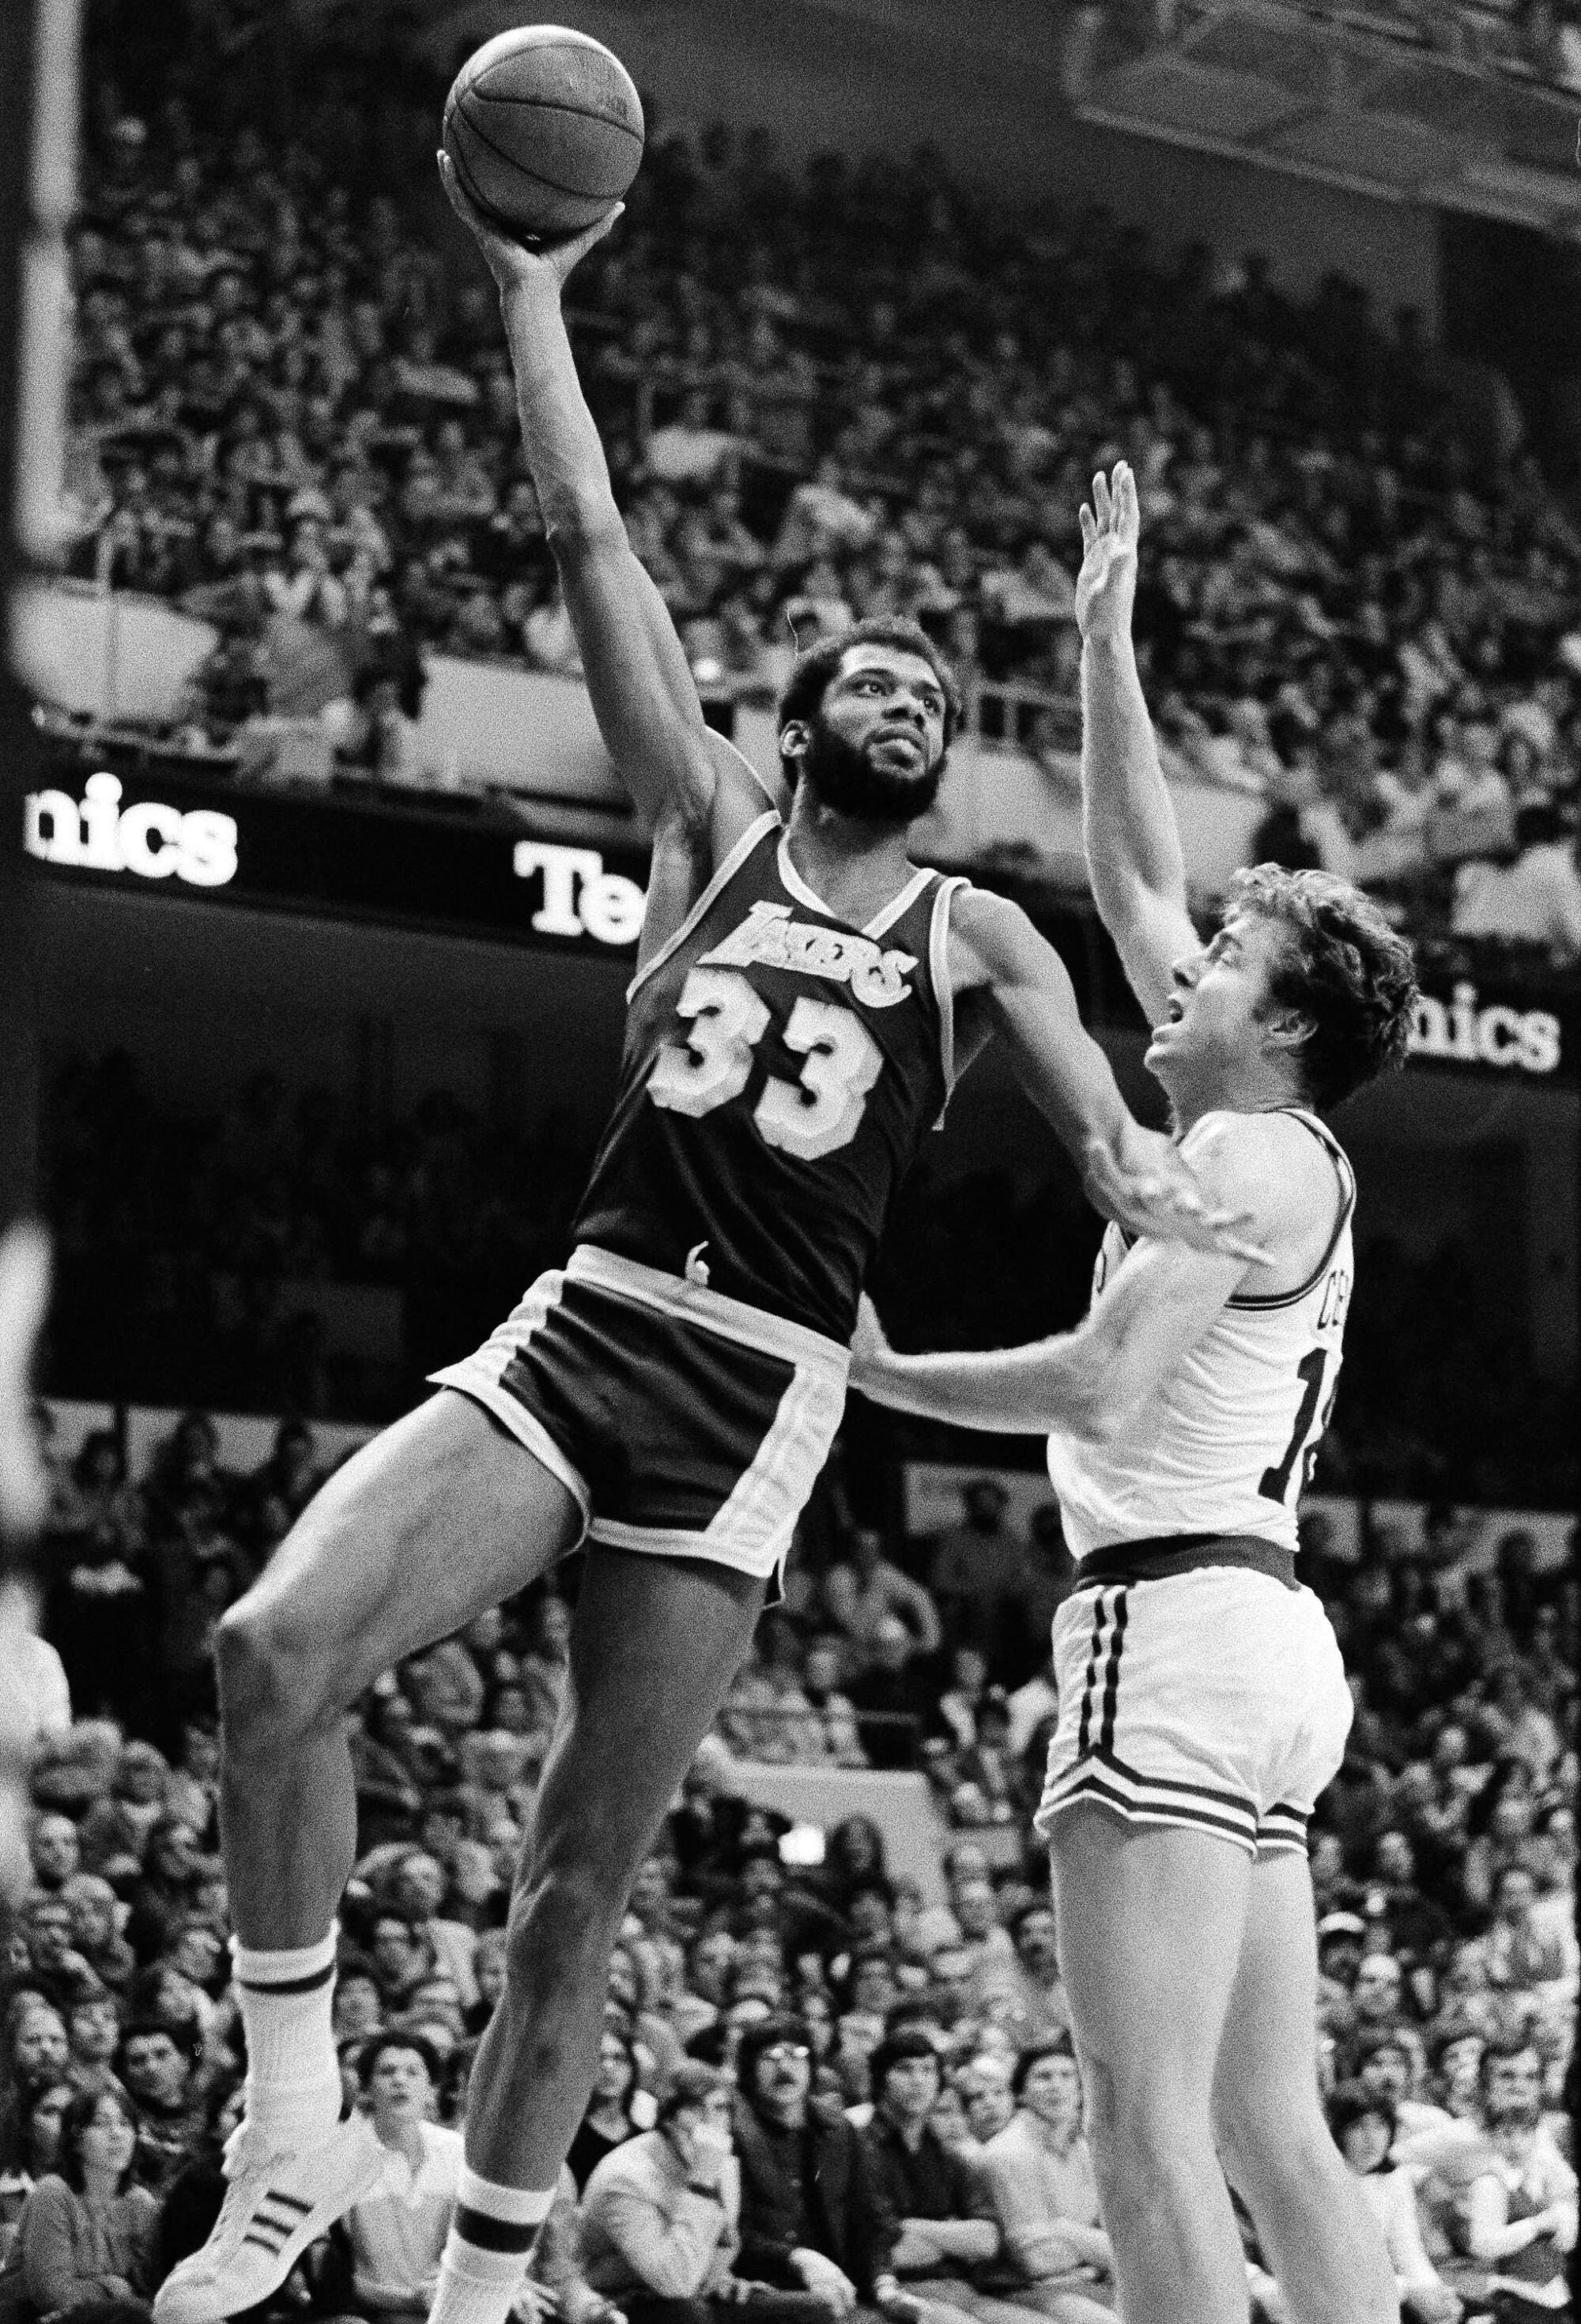 Lakers center Kareem Abdul-Jabbar shoots his famous sky hook over Celtics center Dave Cowens in 1980.